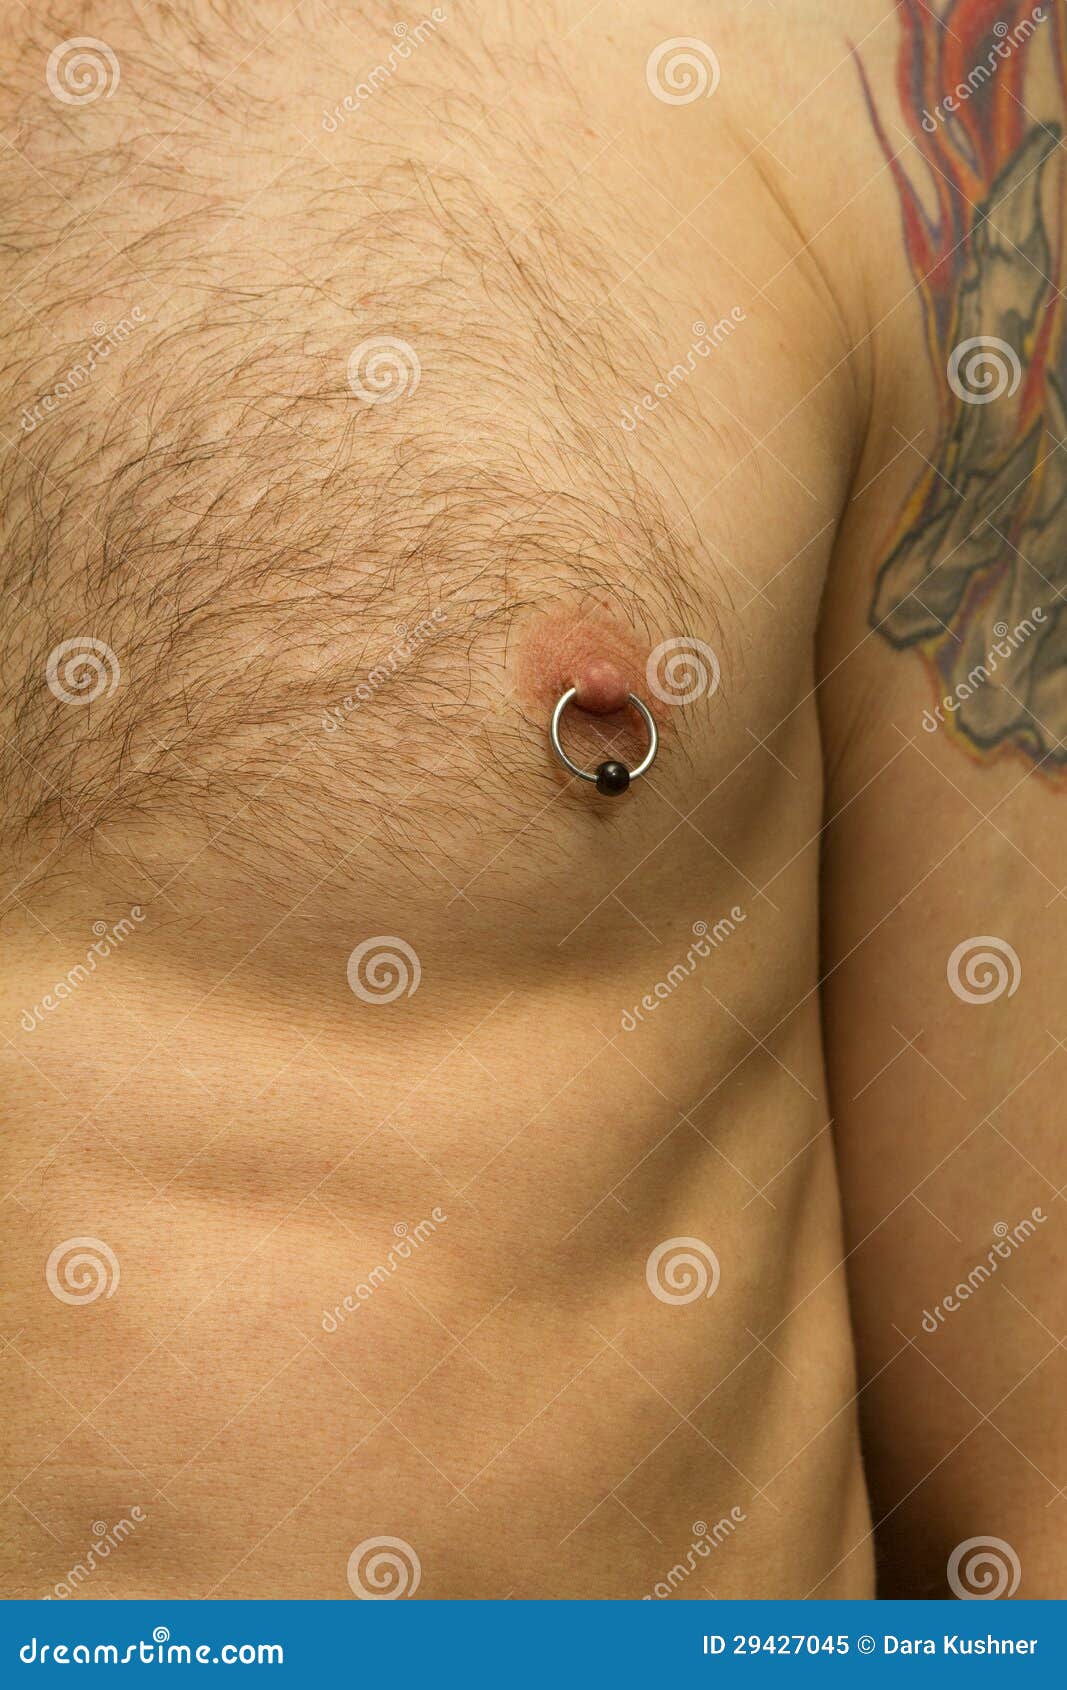 красное уплотнение на груди у мужчин фото 65